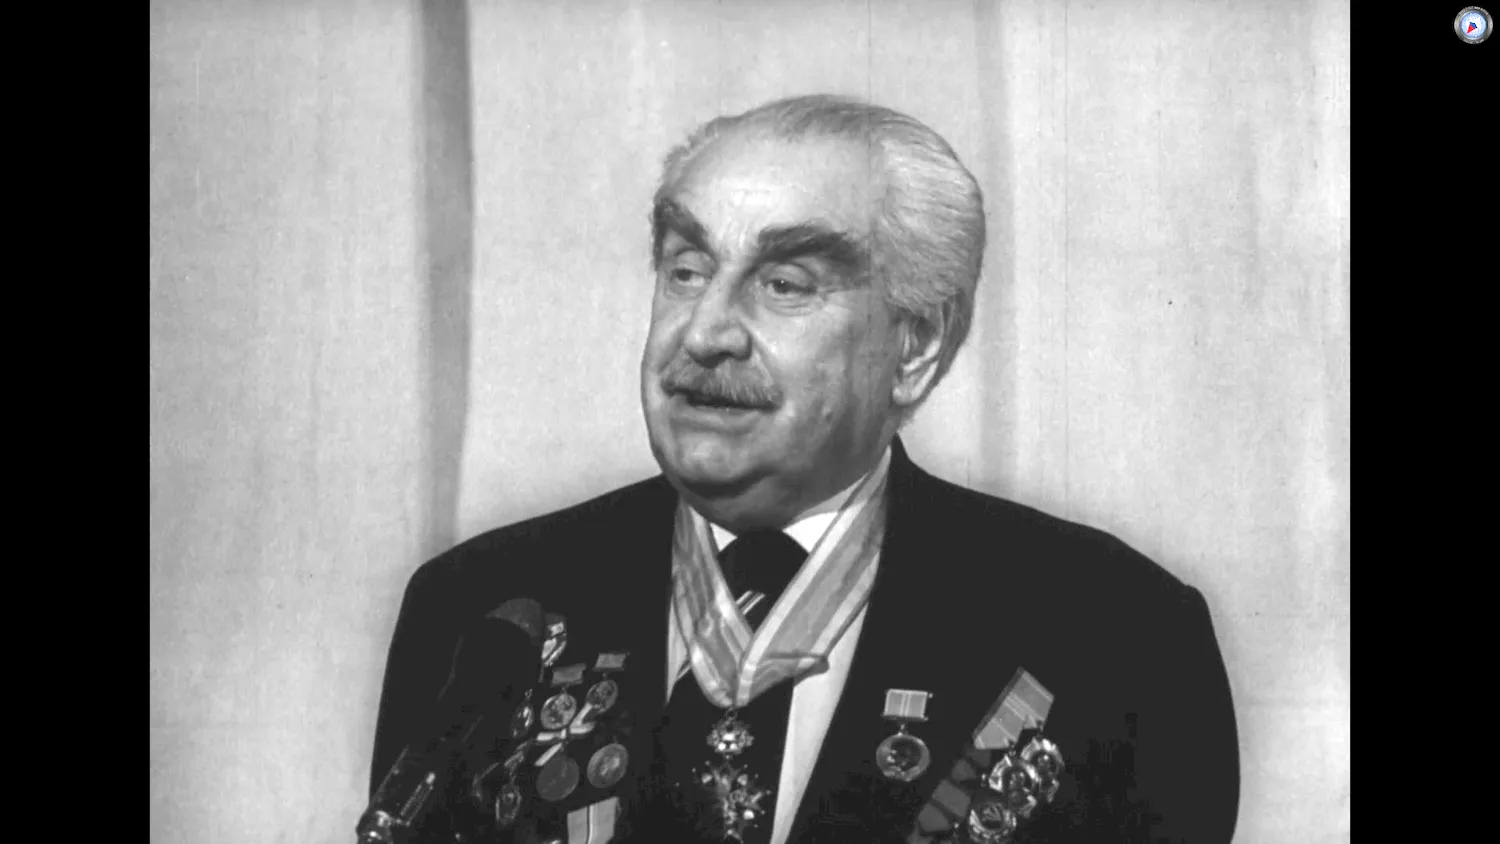 Григорий Александров